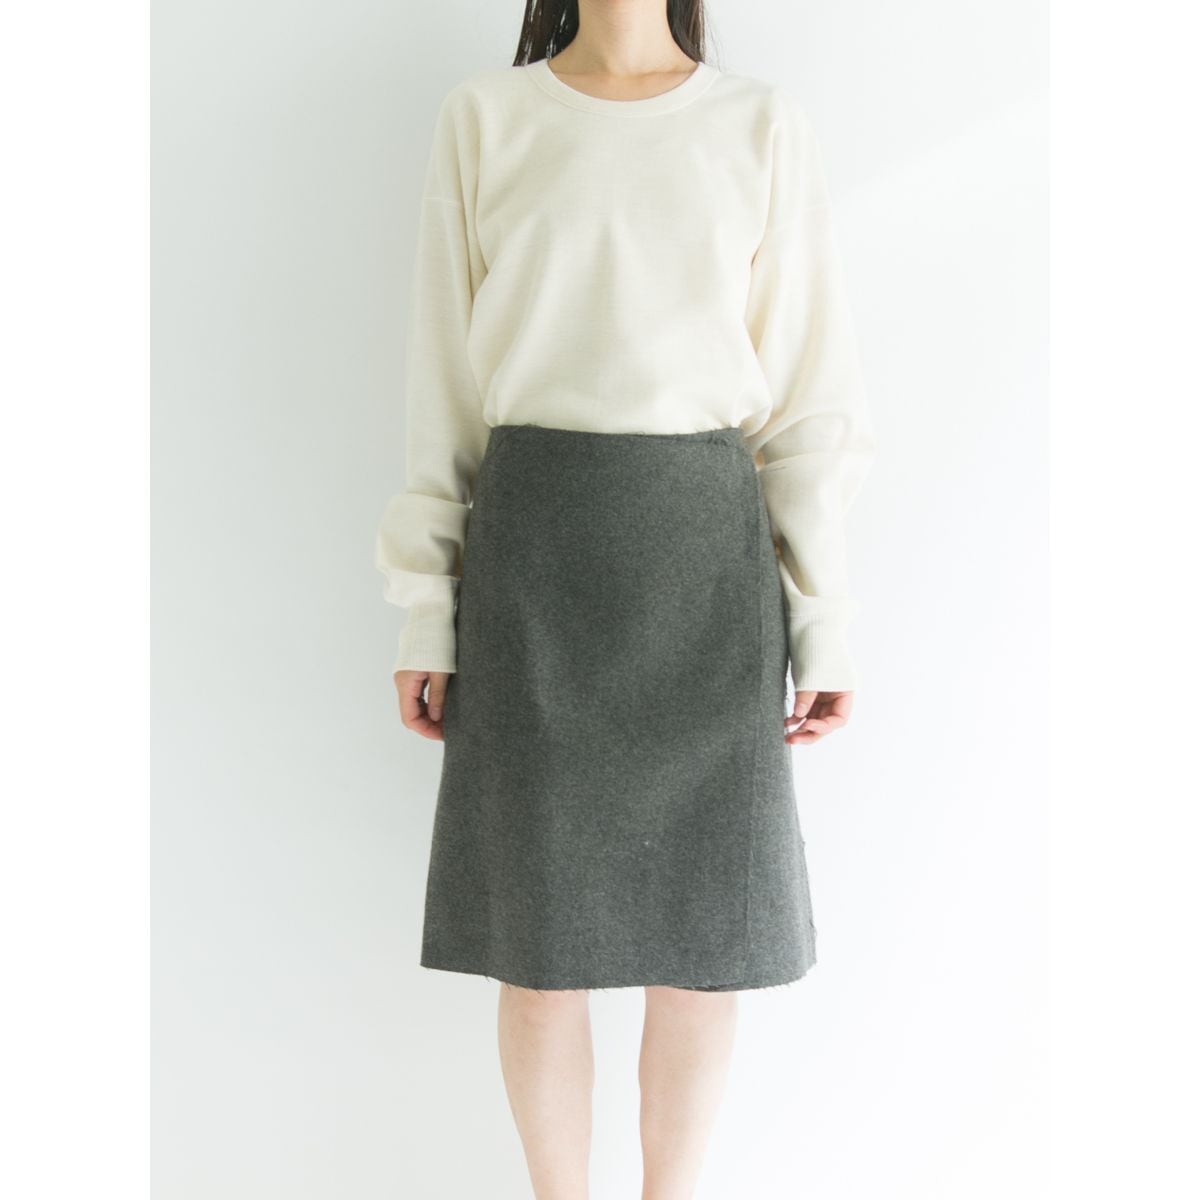 CELINE】Made in Italy wool skirt（イタリア製 オールド セリーヌ